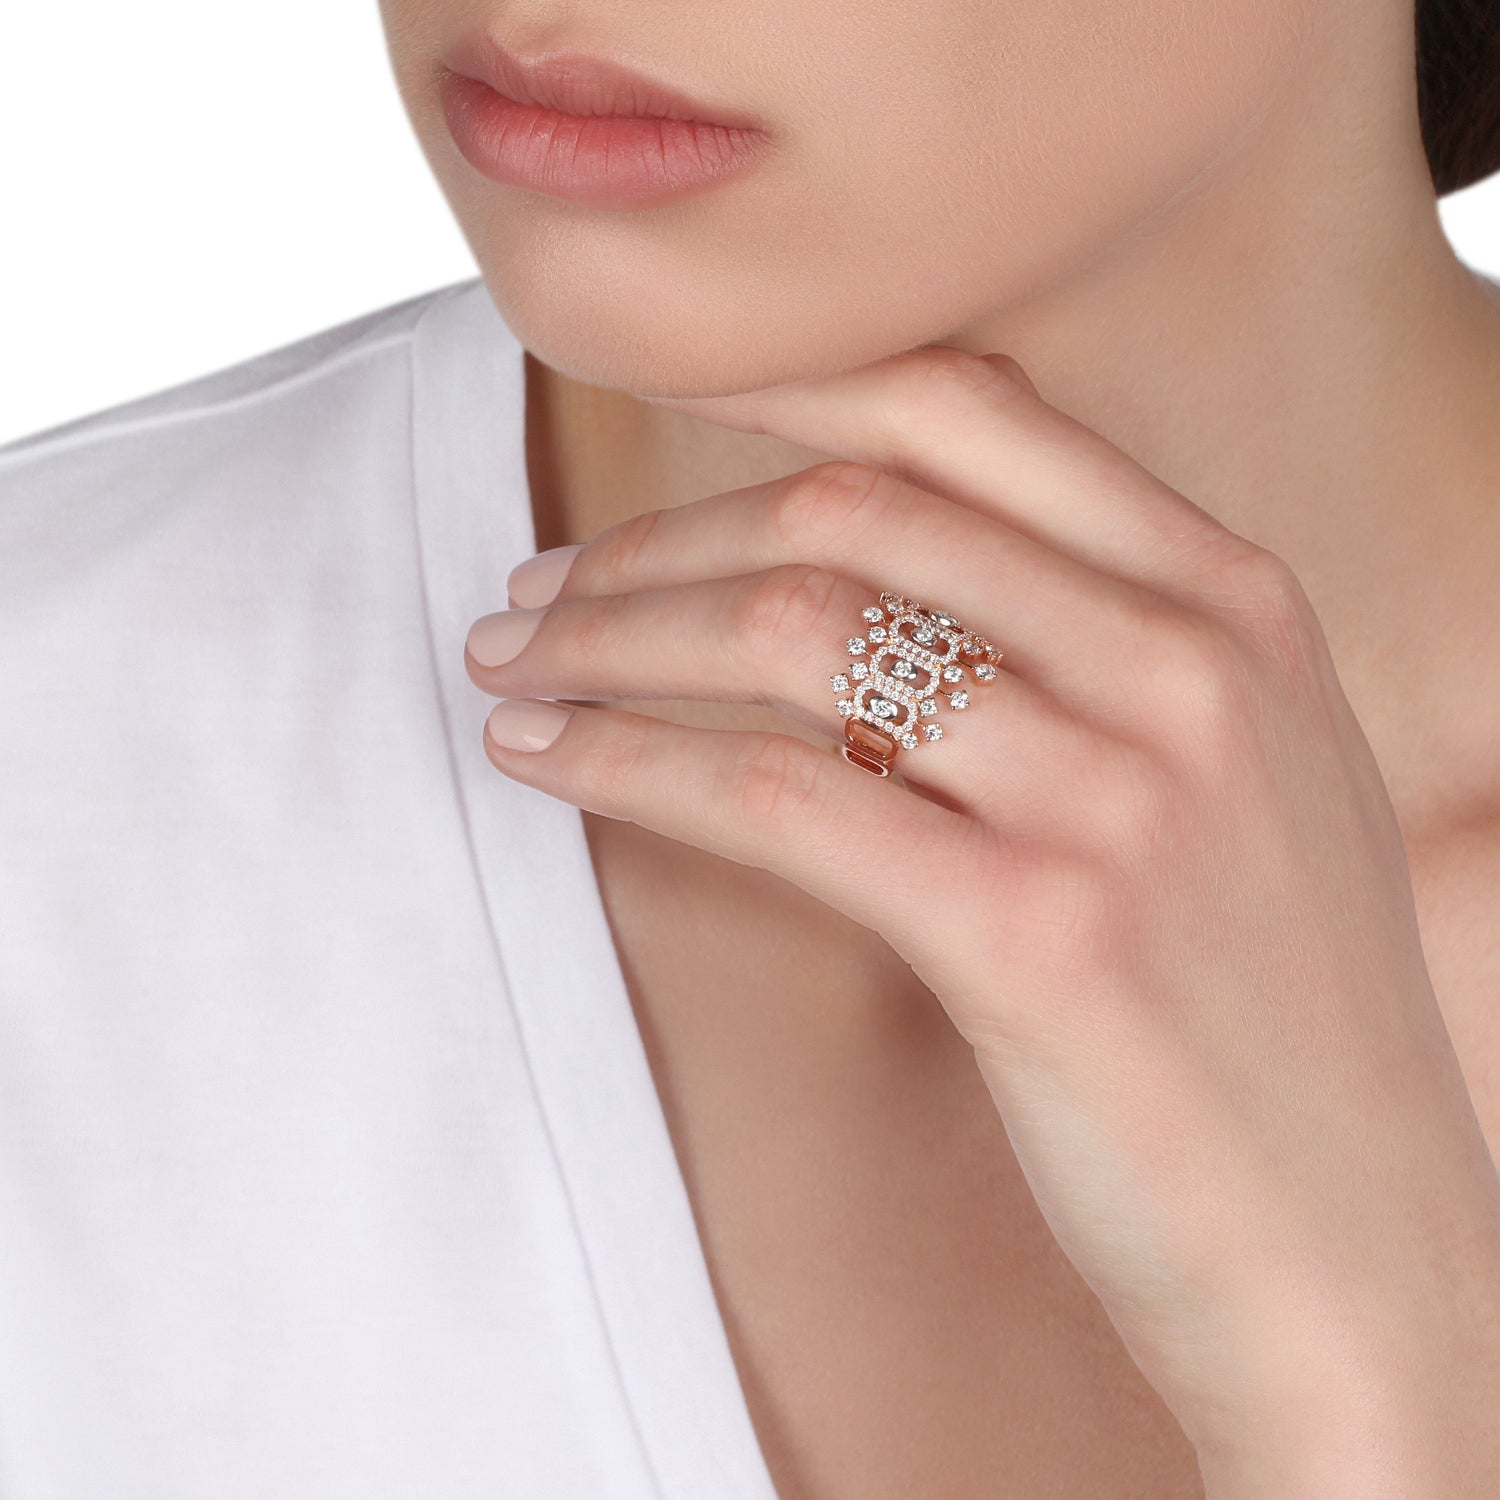 Yellow Gold Tiara Diamond Ring | jewellery store | diamond rings